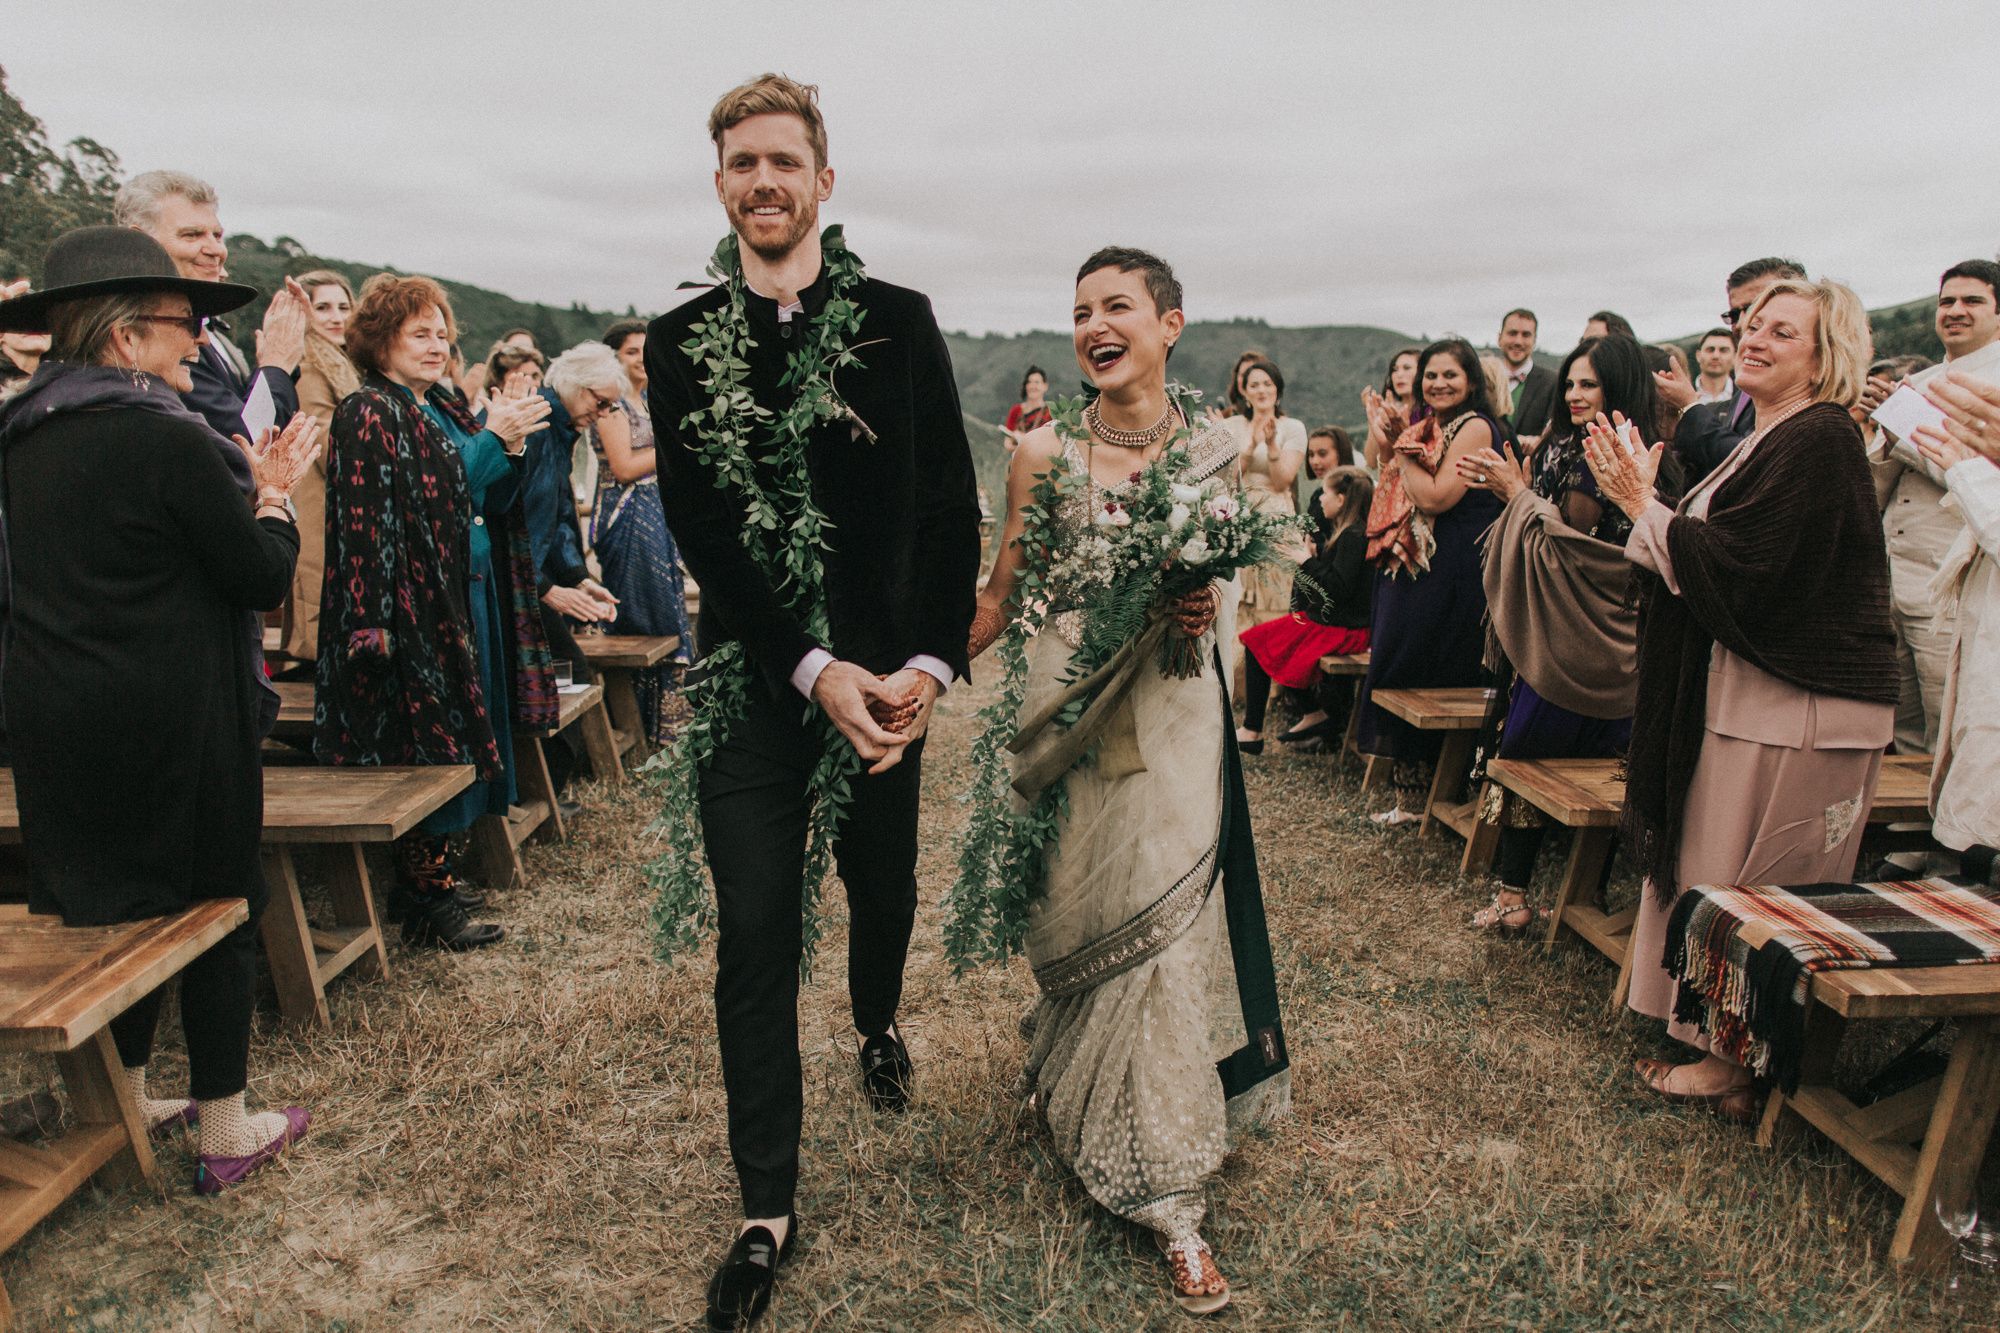 Wedding Inspiration: A San Francisco Artist's Three-Day Glampfest Near Half Moon Bay